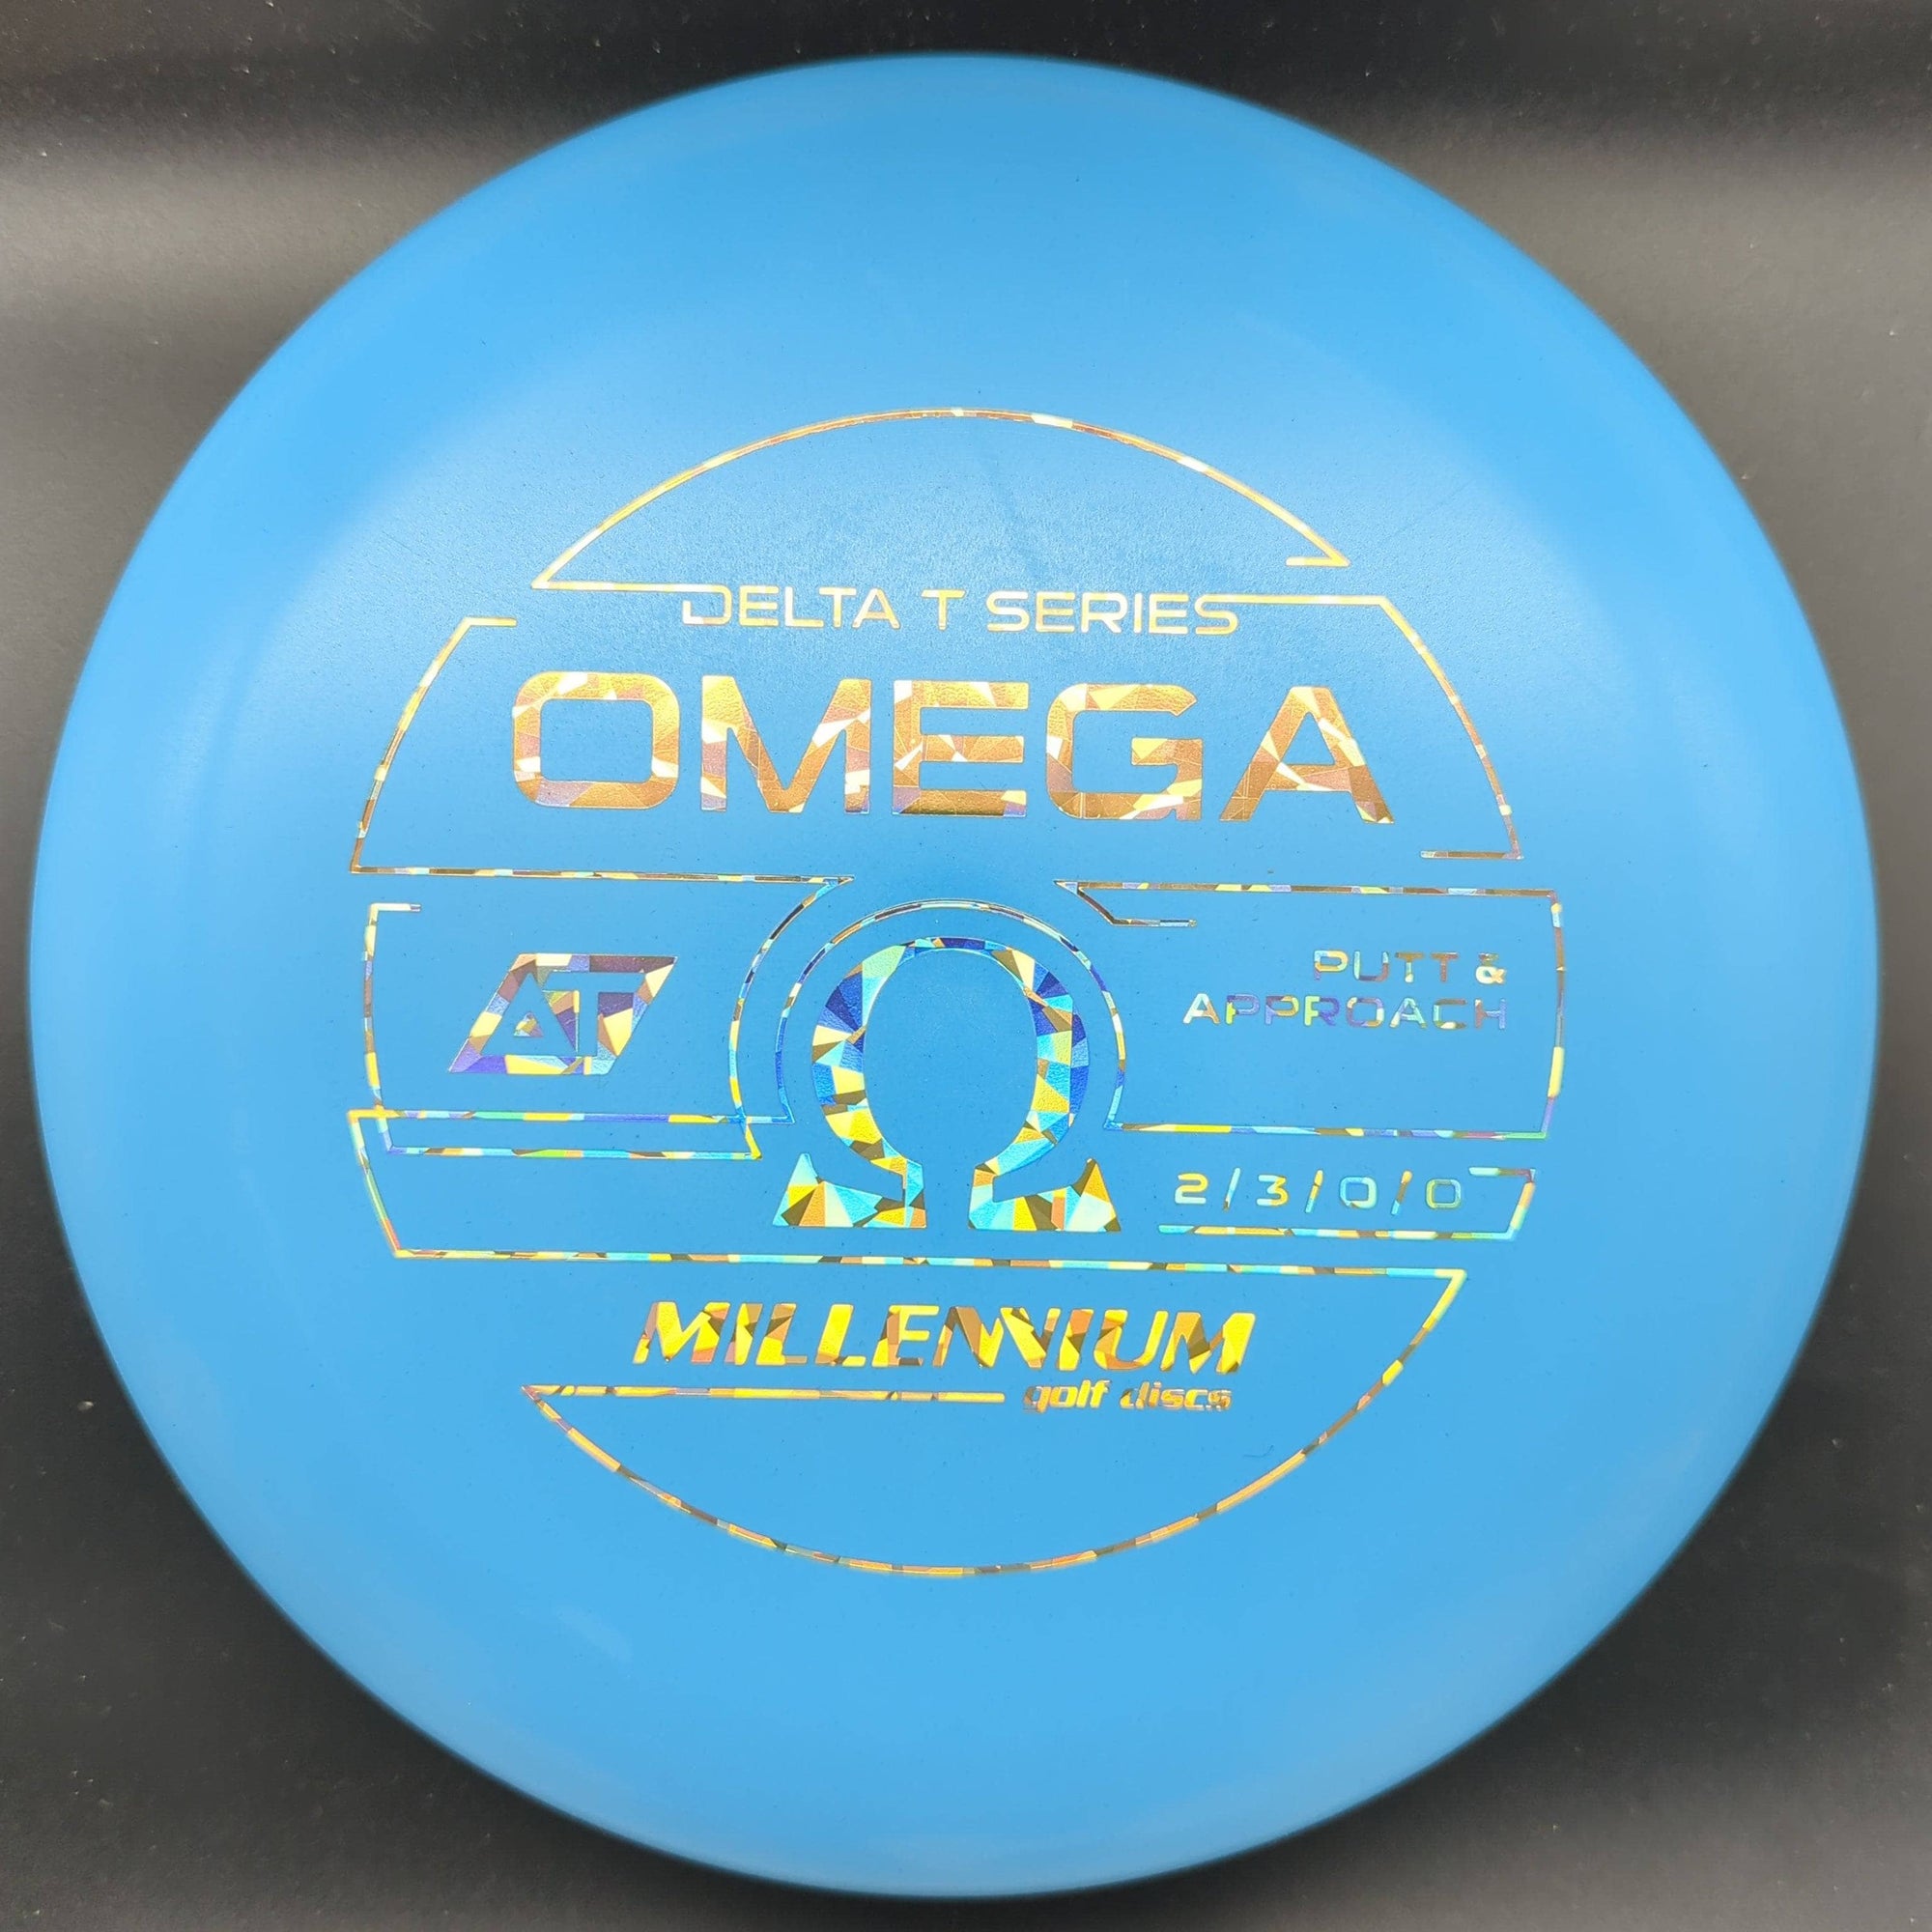 Millennium Discs Putter Omega - DT